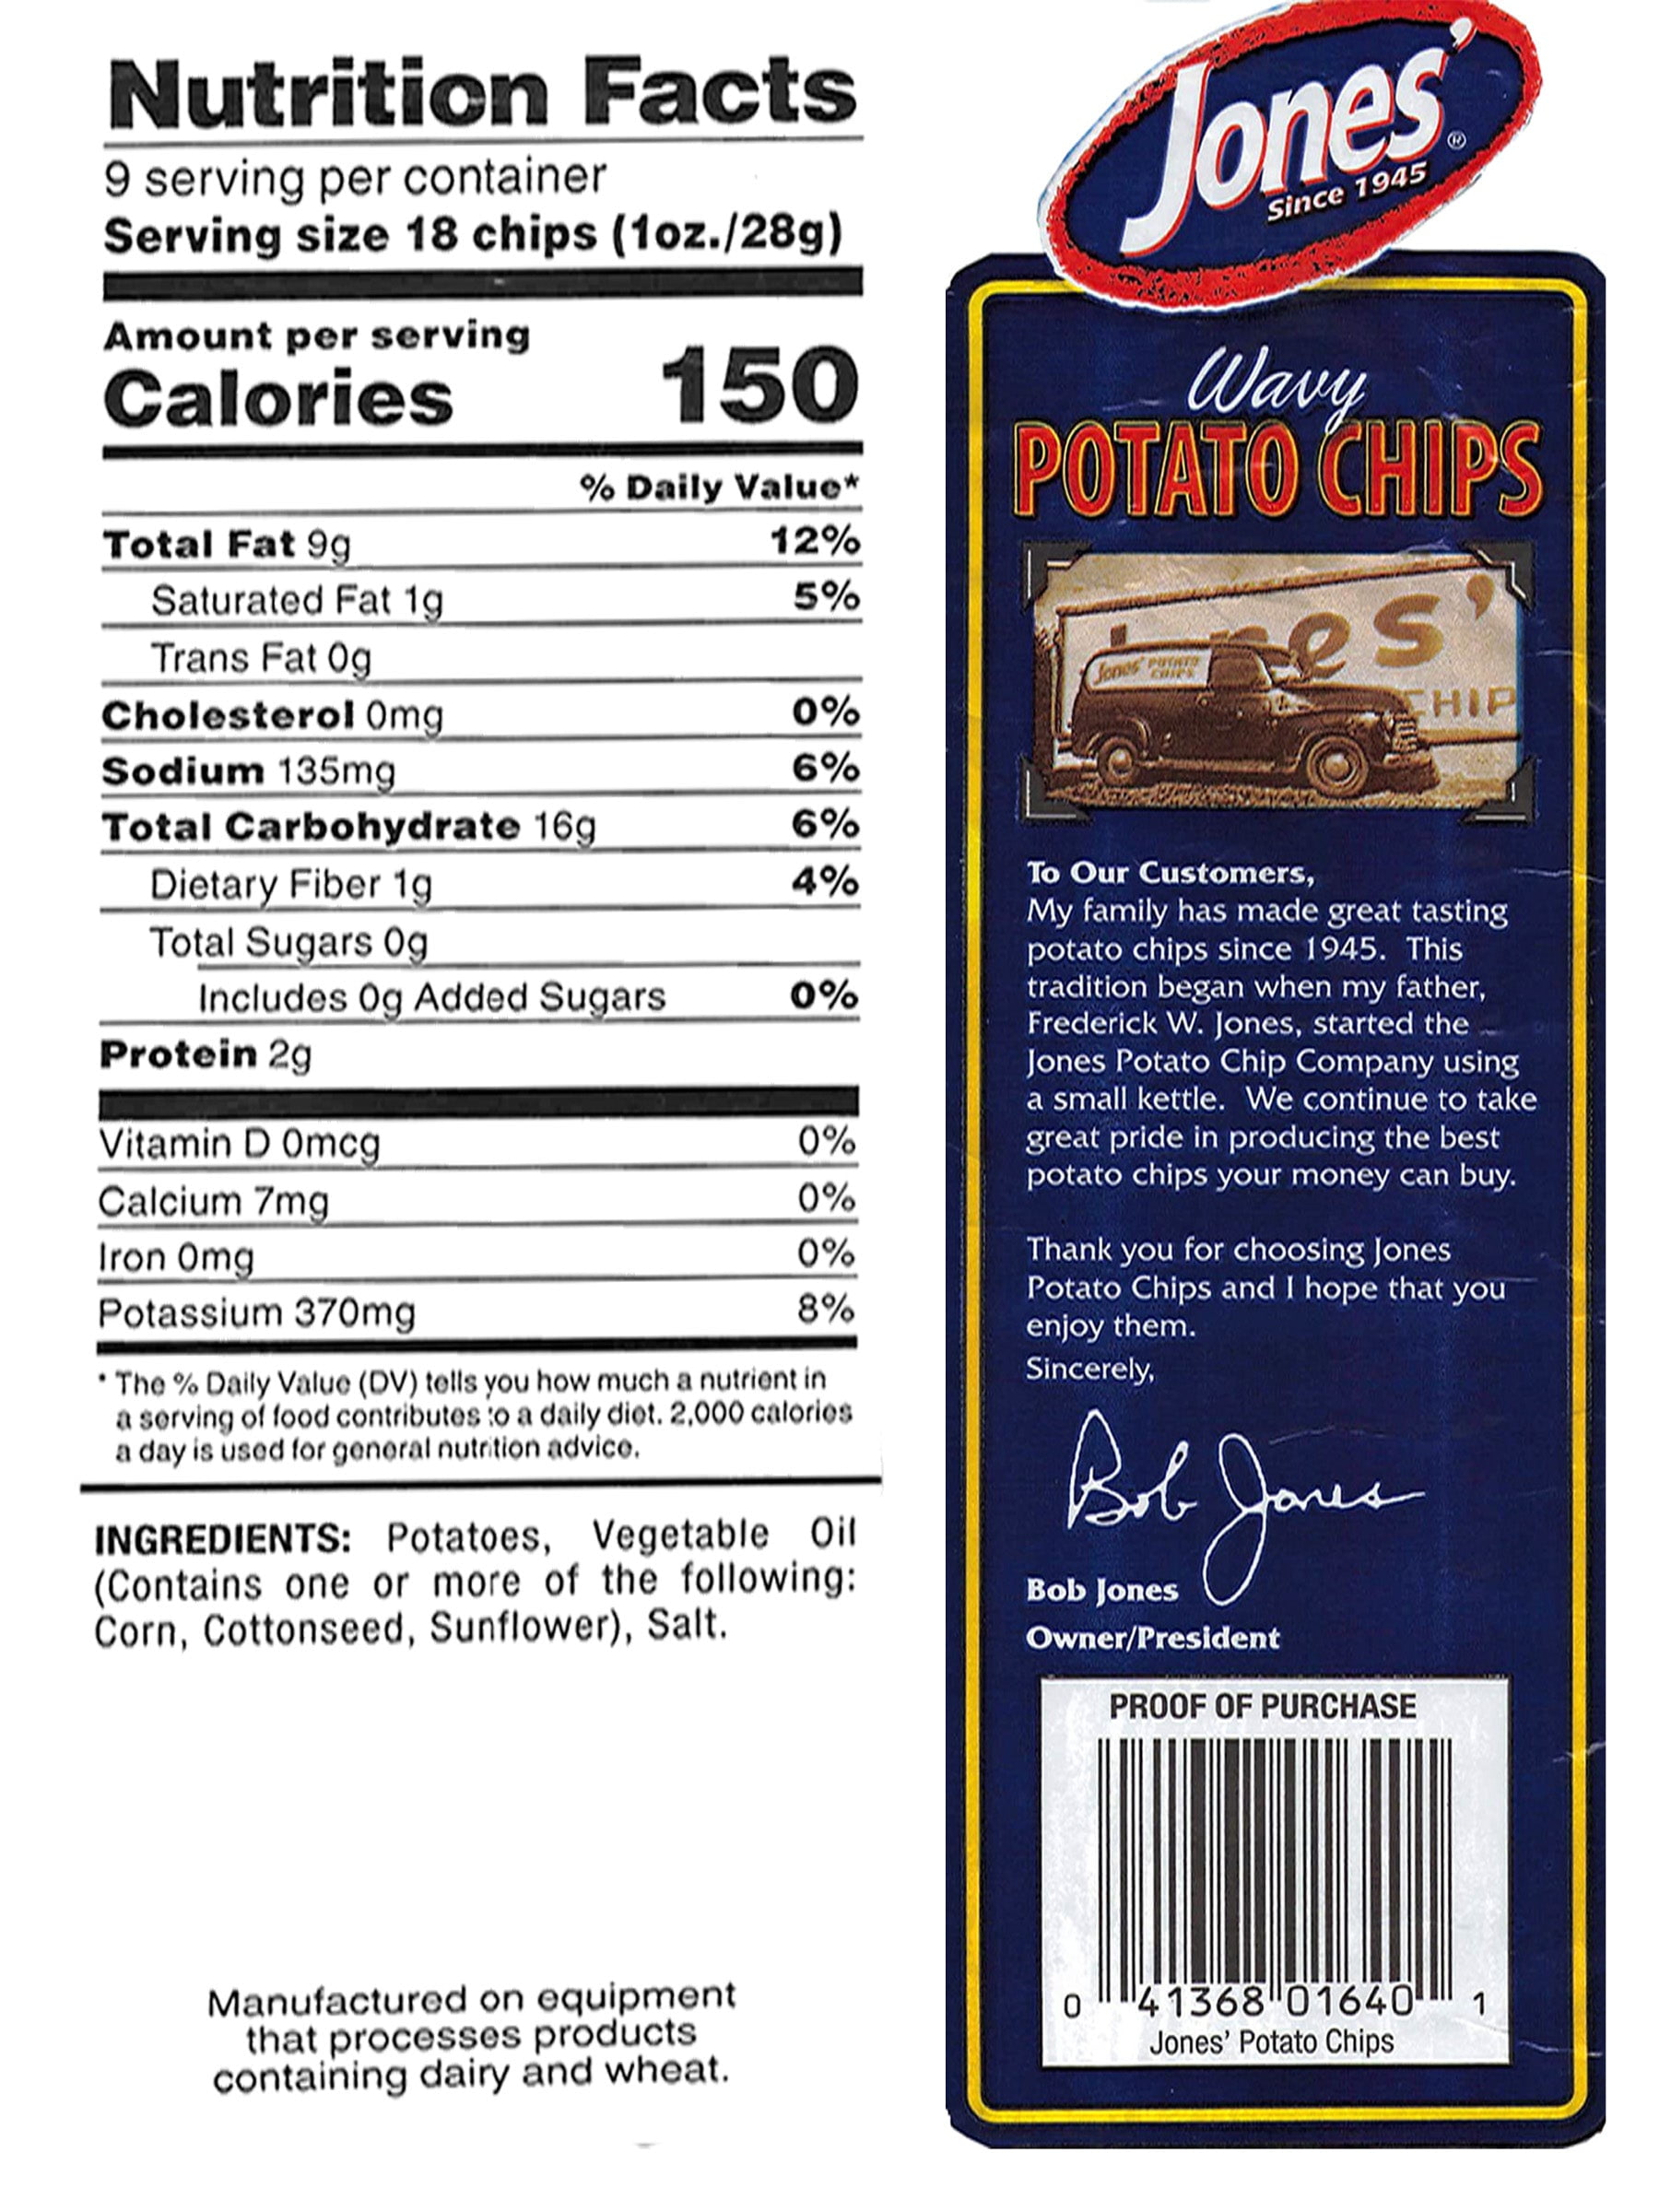 Jones Chip Potato Stix Original, Potato Chips